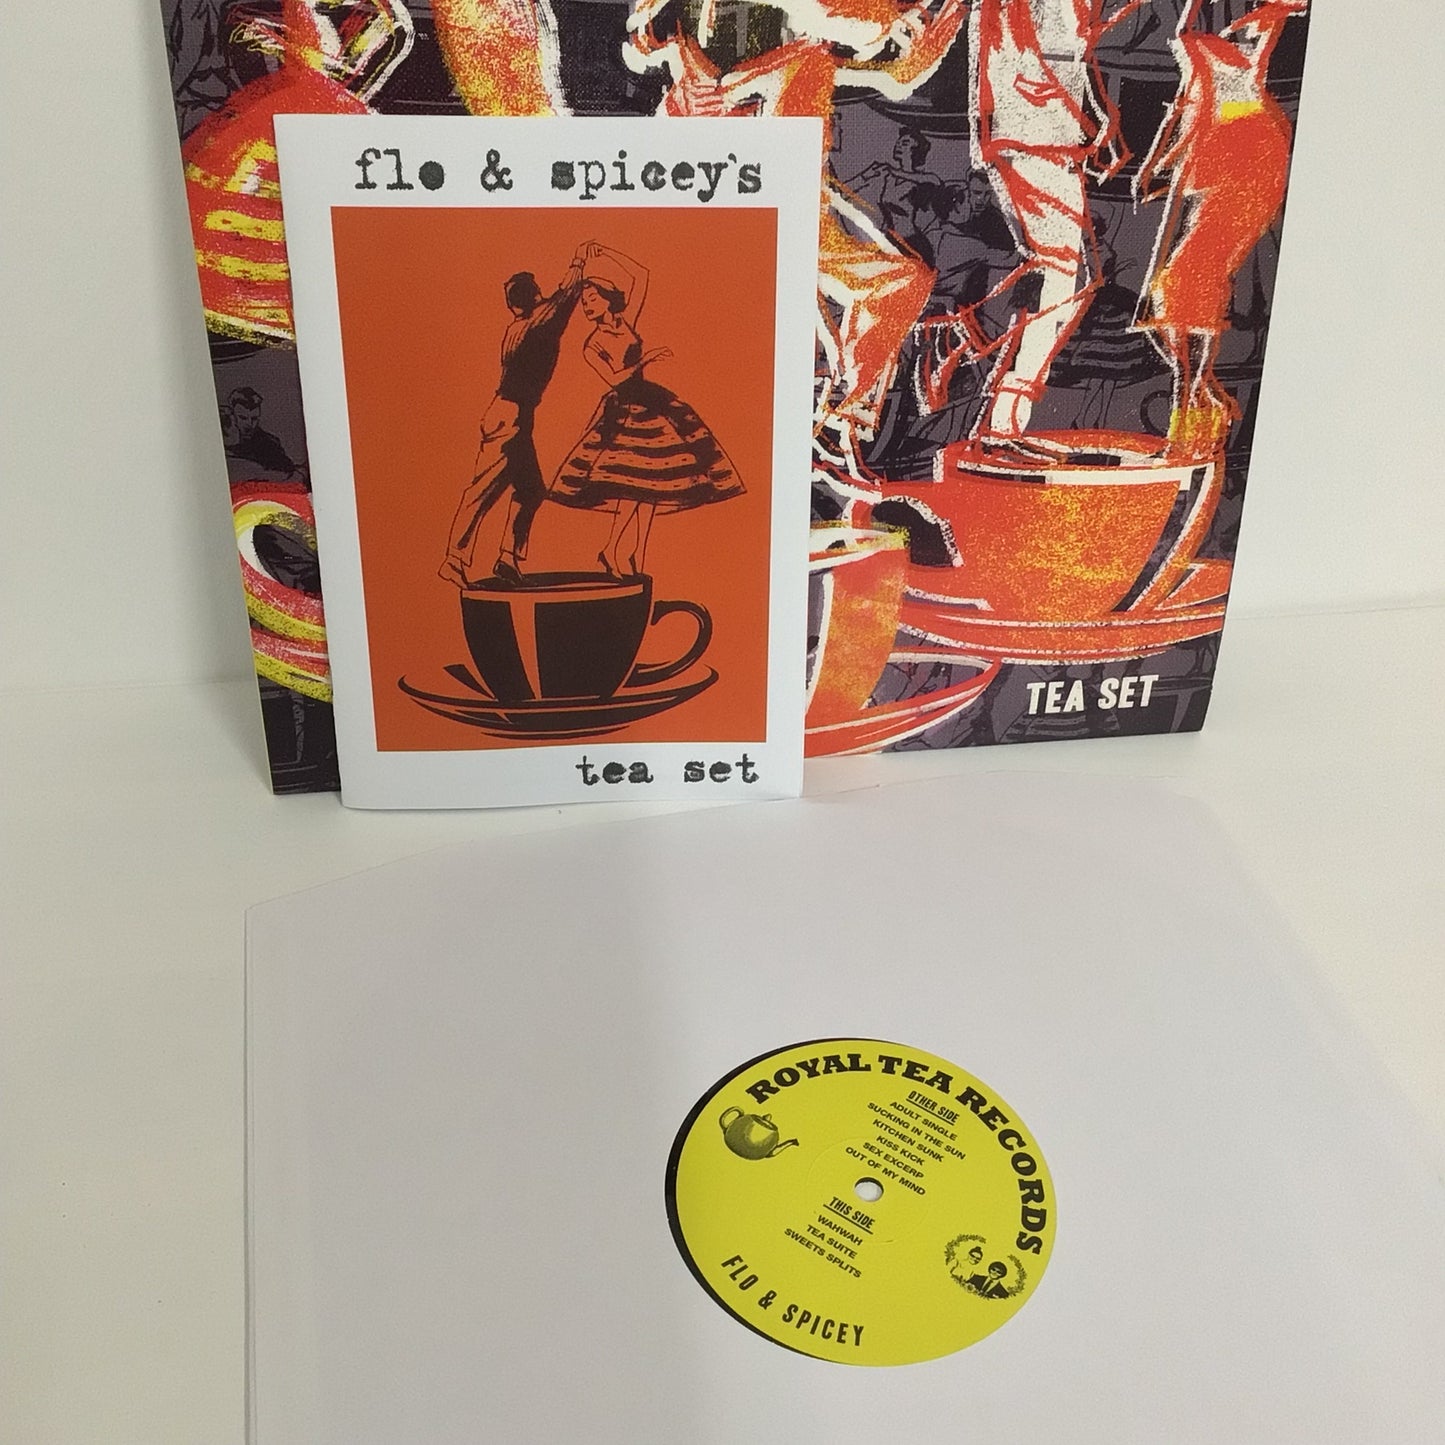 Flo & Spicey - Flo & Spicey’s Tea Set, Royal Tea Records, Vinyl Record